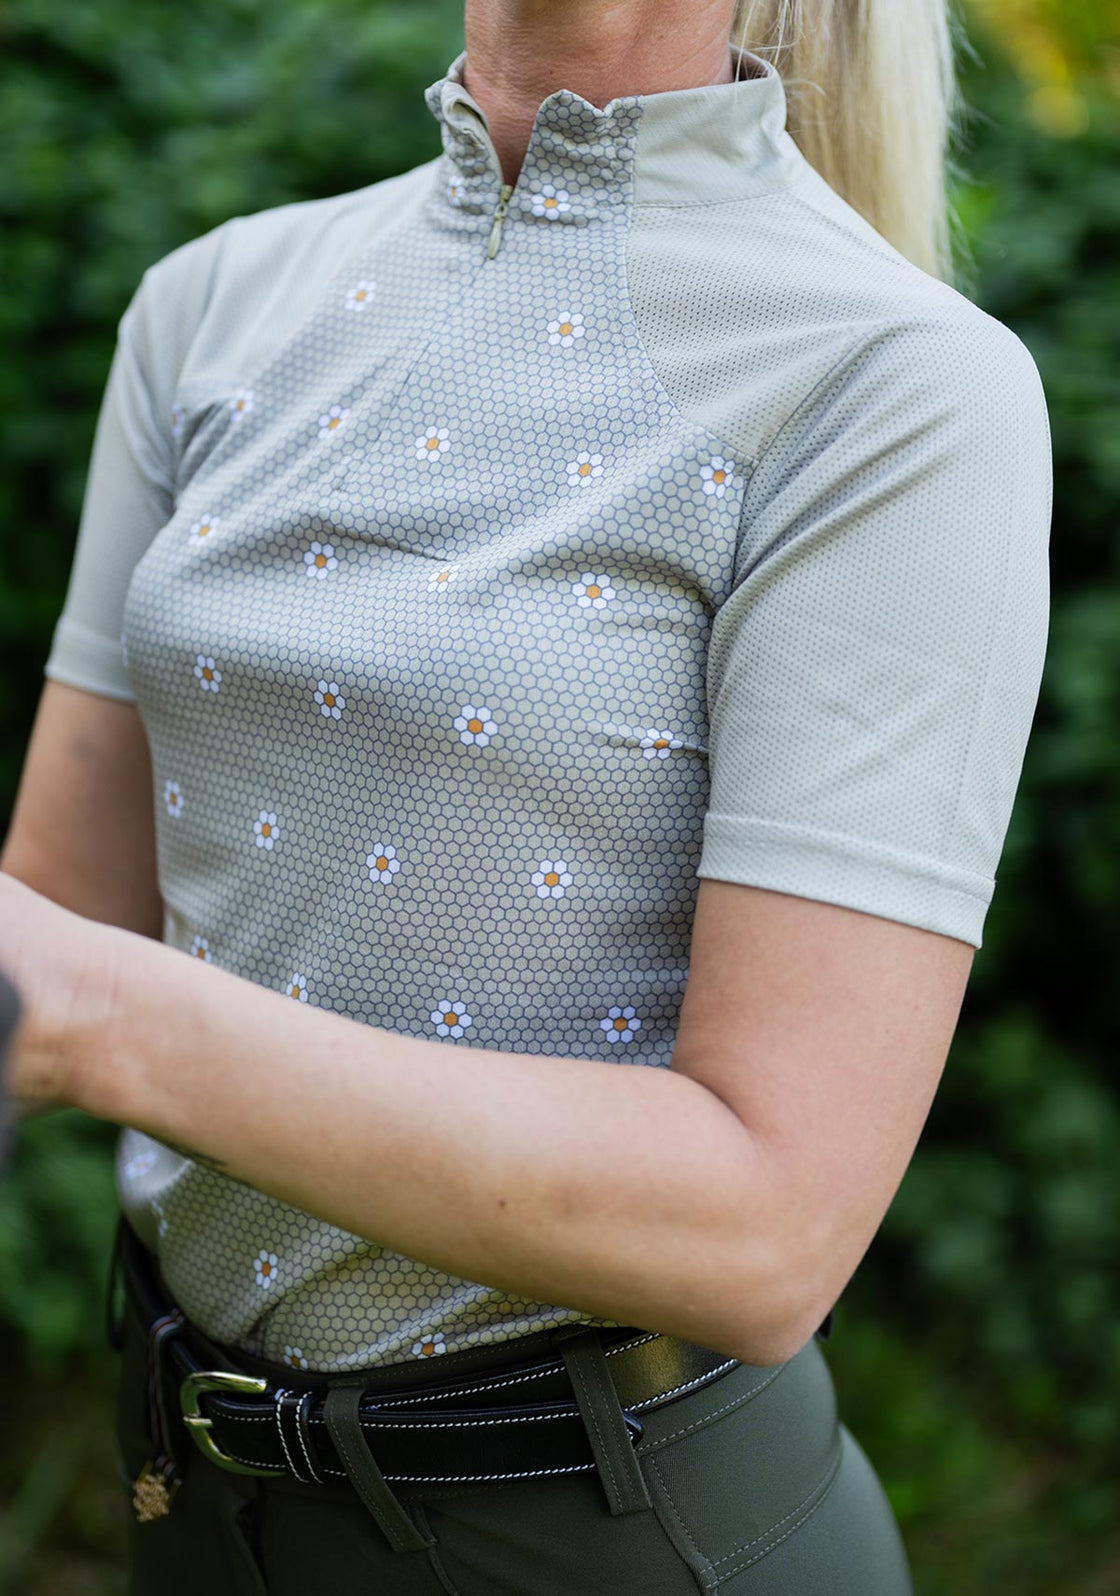 Mosaic Daises in Olive Short Sleeve Sport Sun Shirt